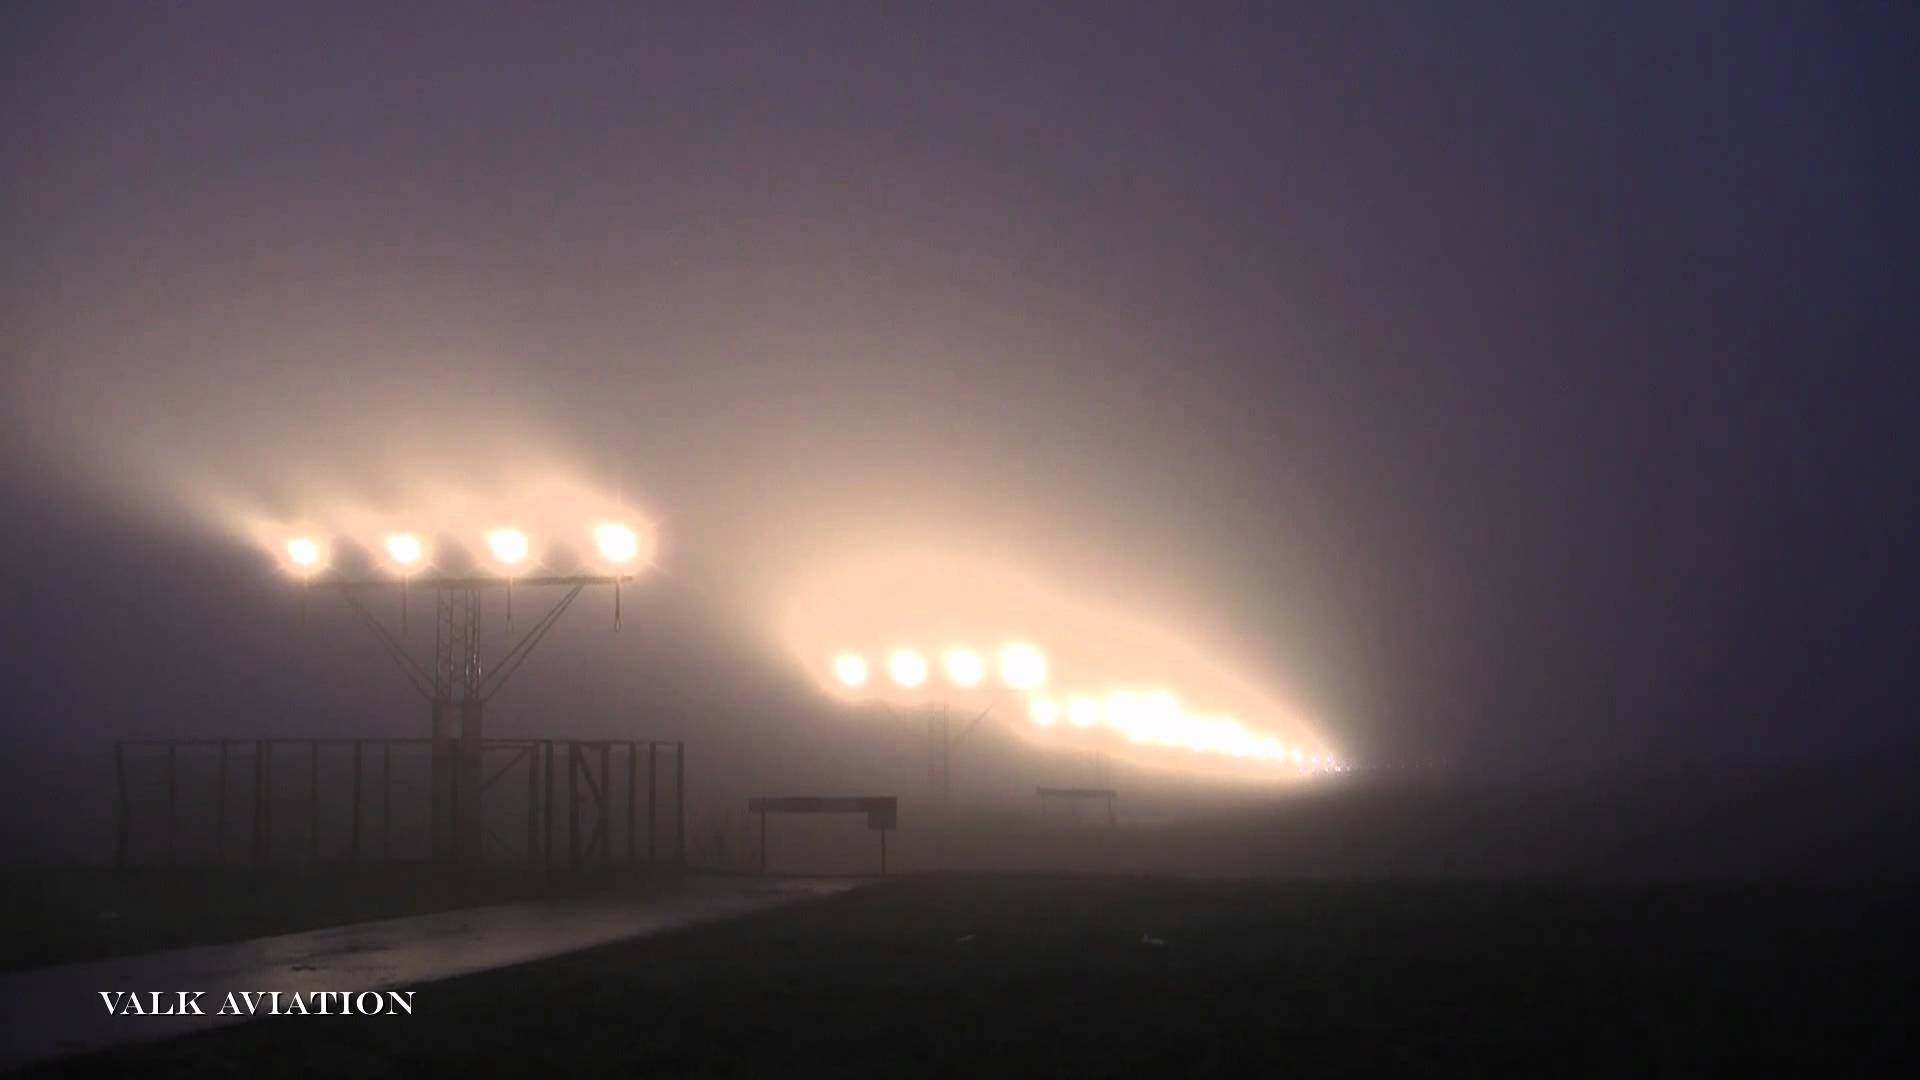 Dense Fog Landings at Amsterdam Airport - YouTube